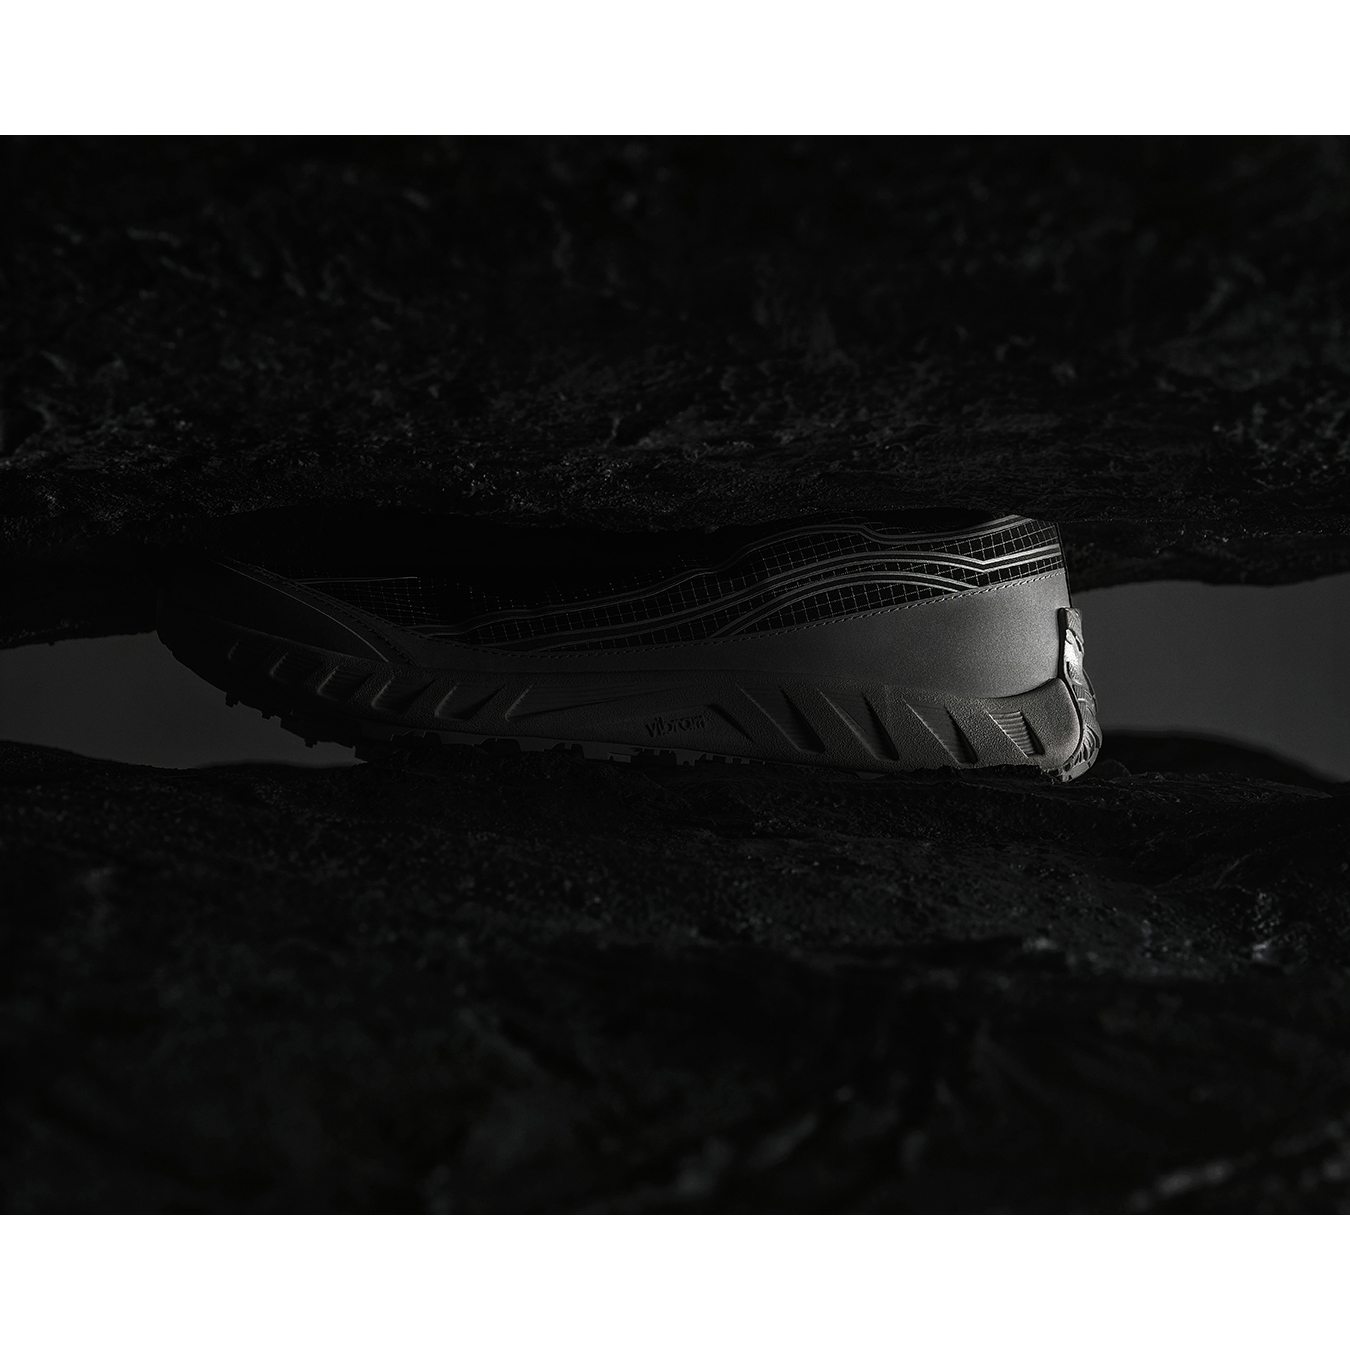 Norda norda 002 - Summit Black | Performance Sneakers | Huckberry